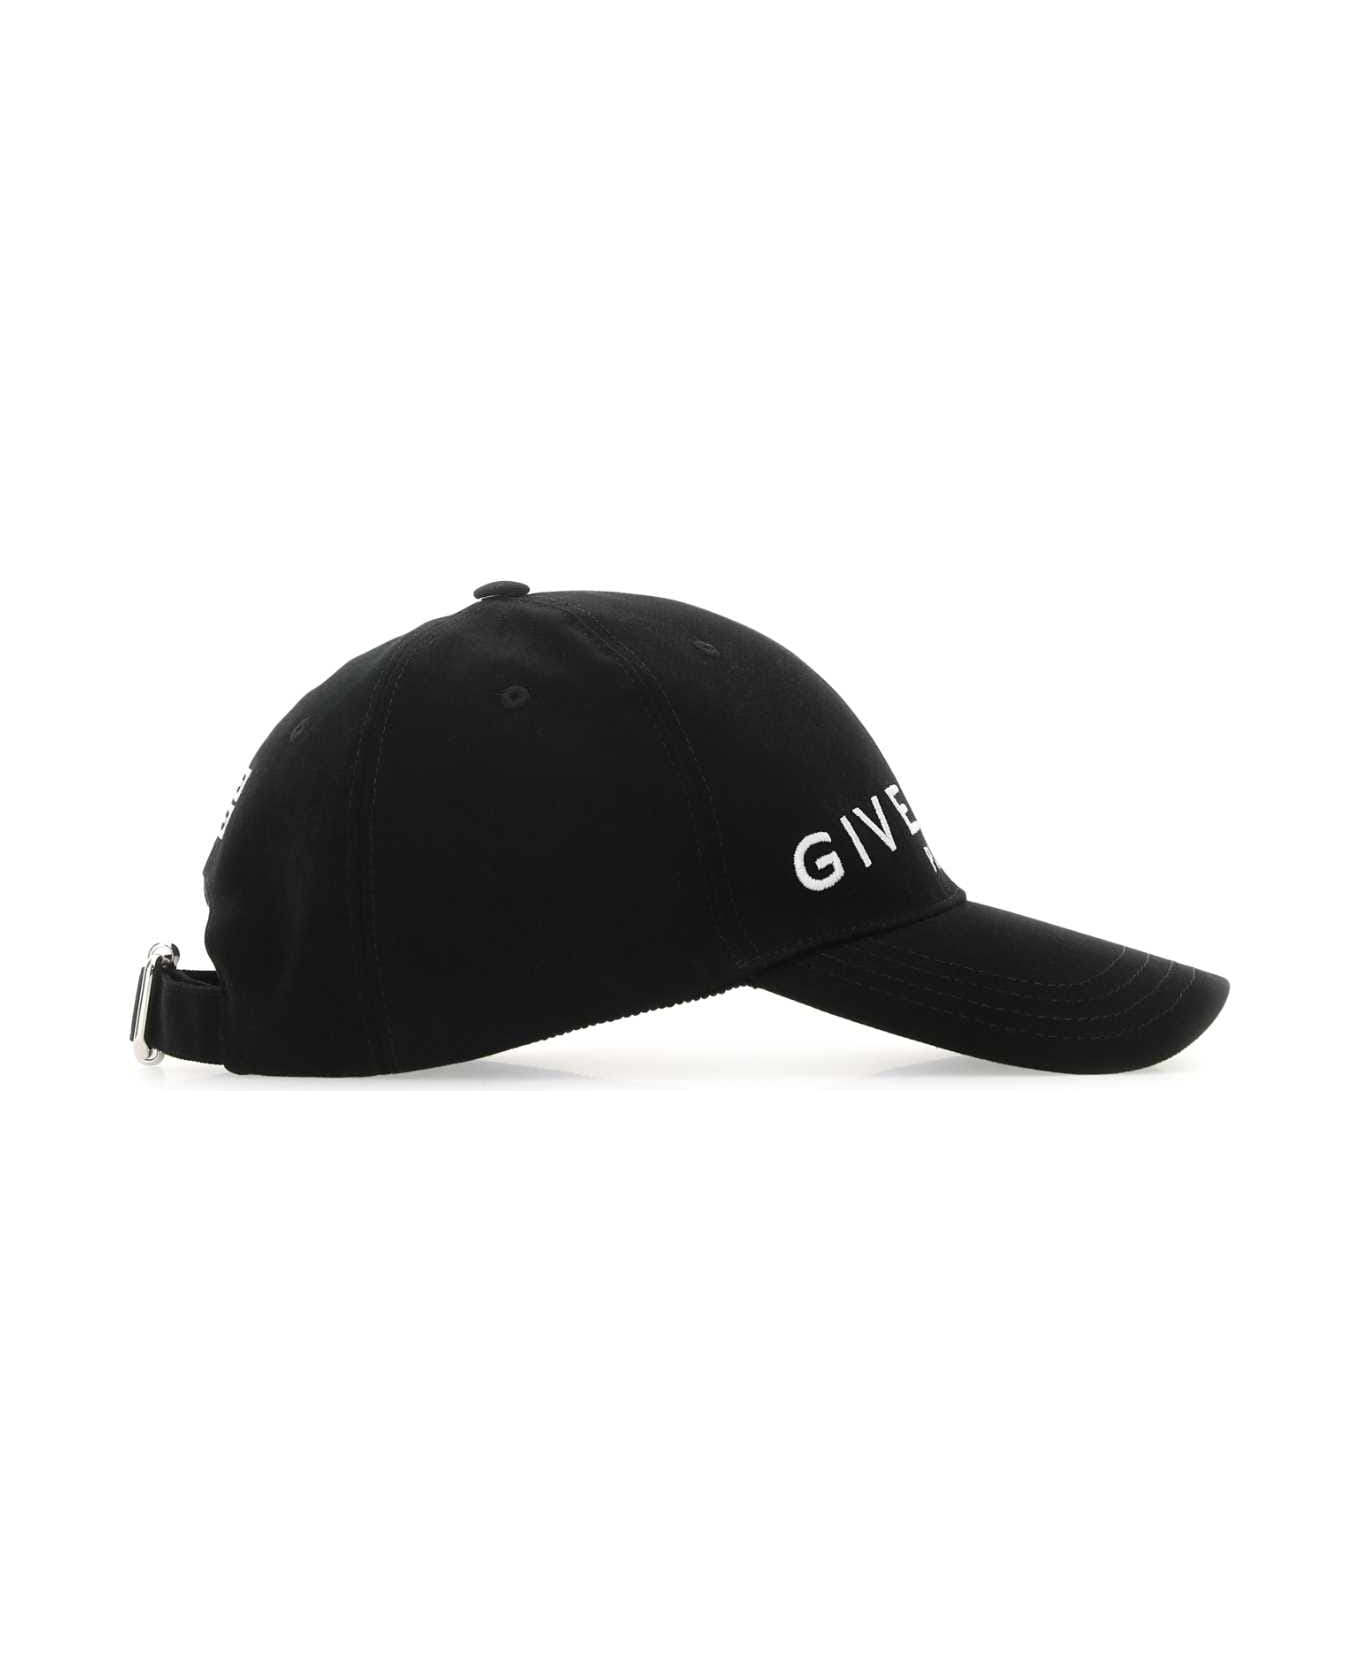 Givenchy Black Cotton Blend Baseball Cap - BLACK